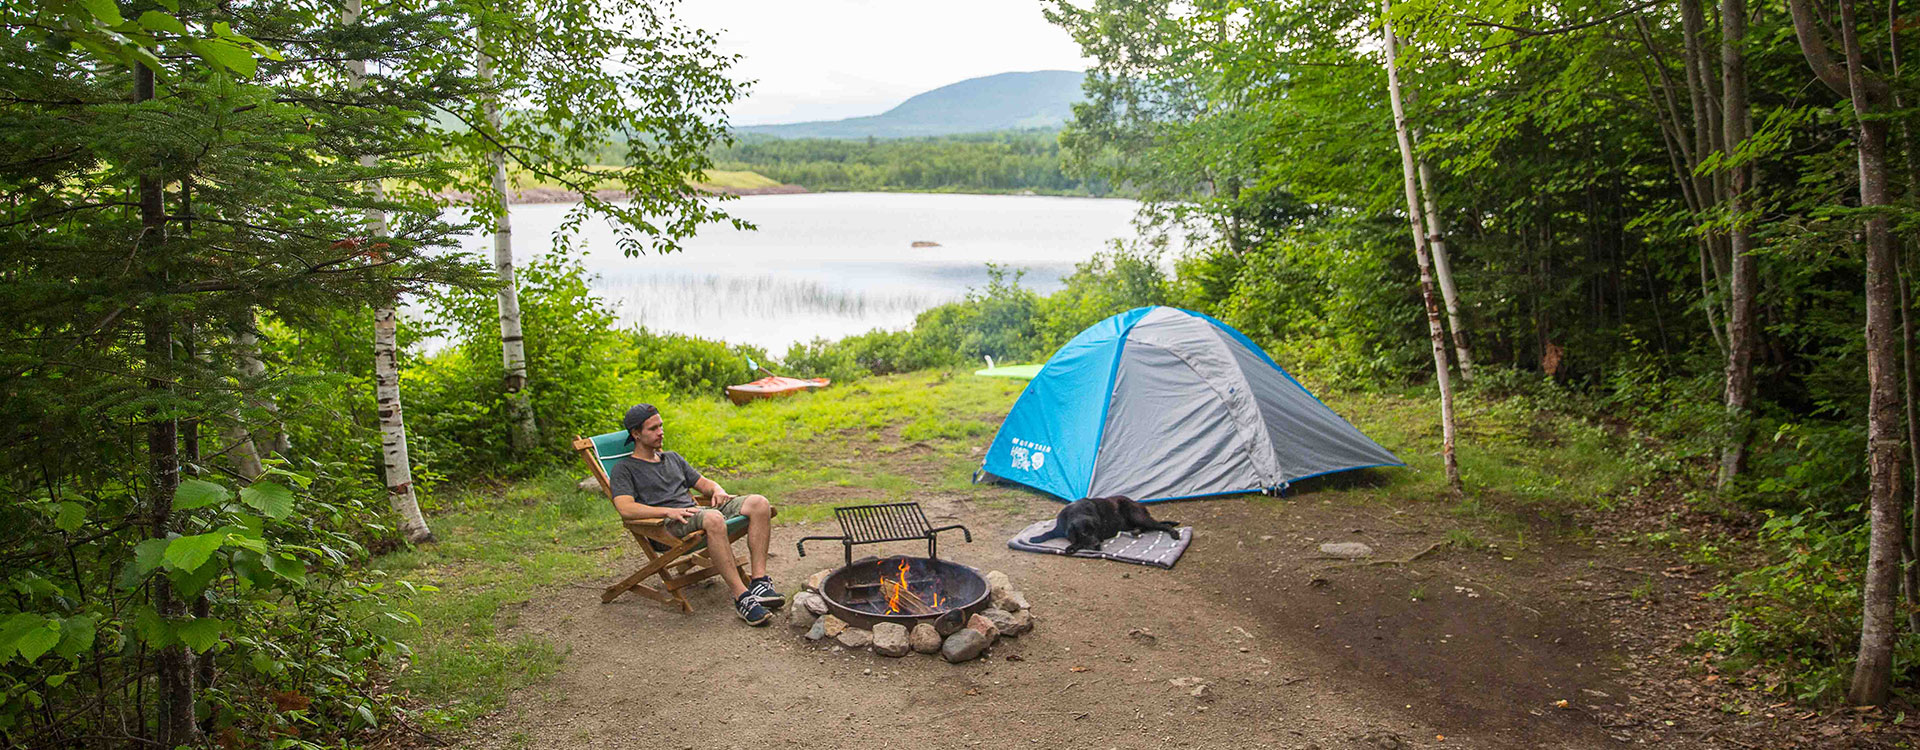 Camping lakeside at Jericho Mountain